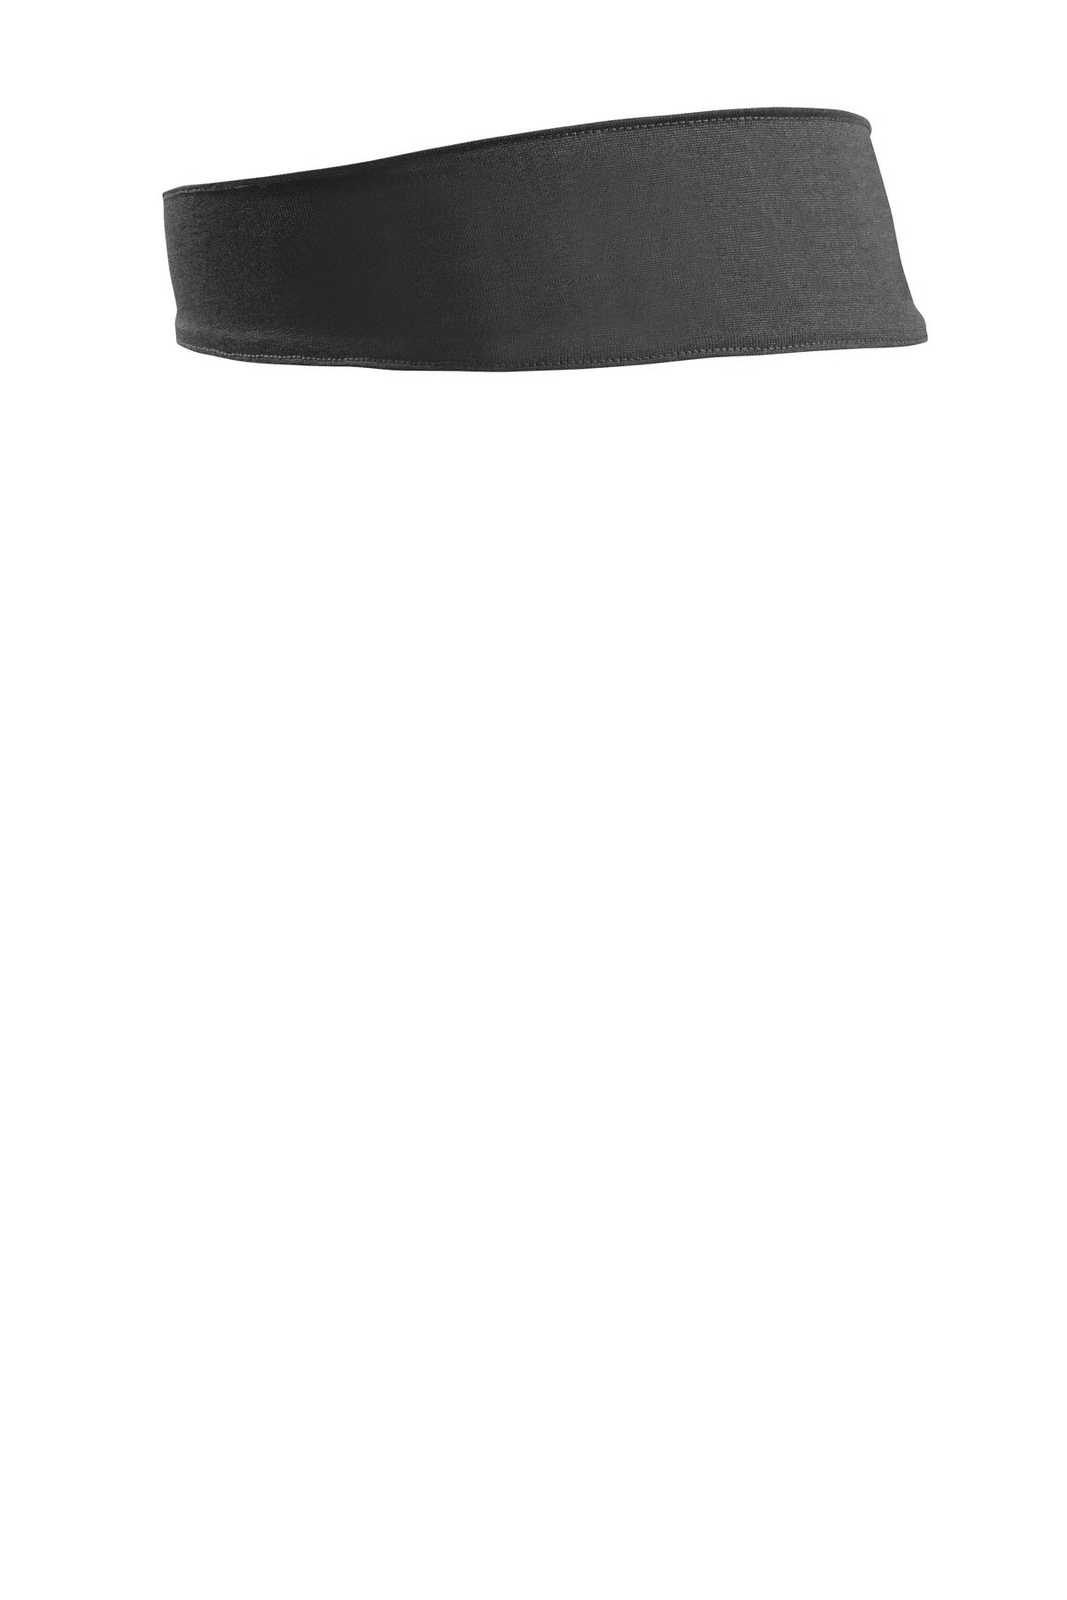 Sport-Tek STA46 Contender Headband - Graphite Heather - HIT a Double - 1